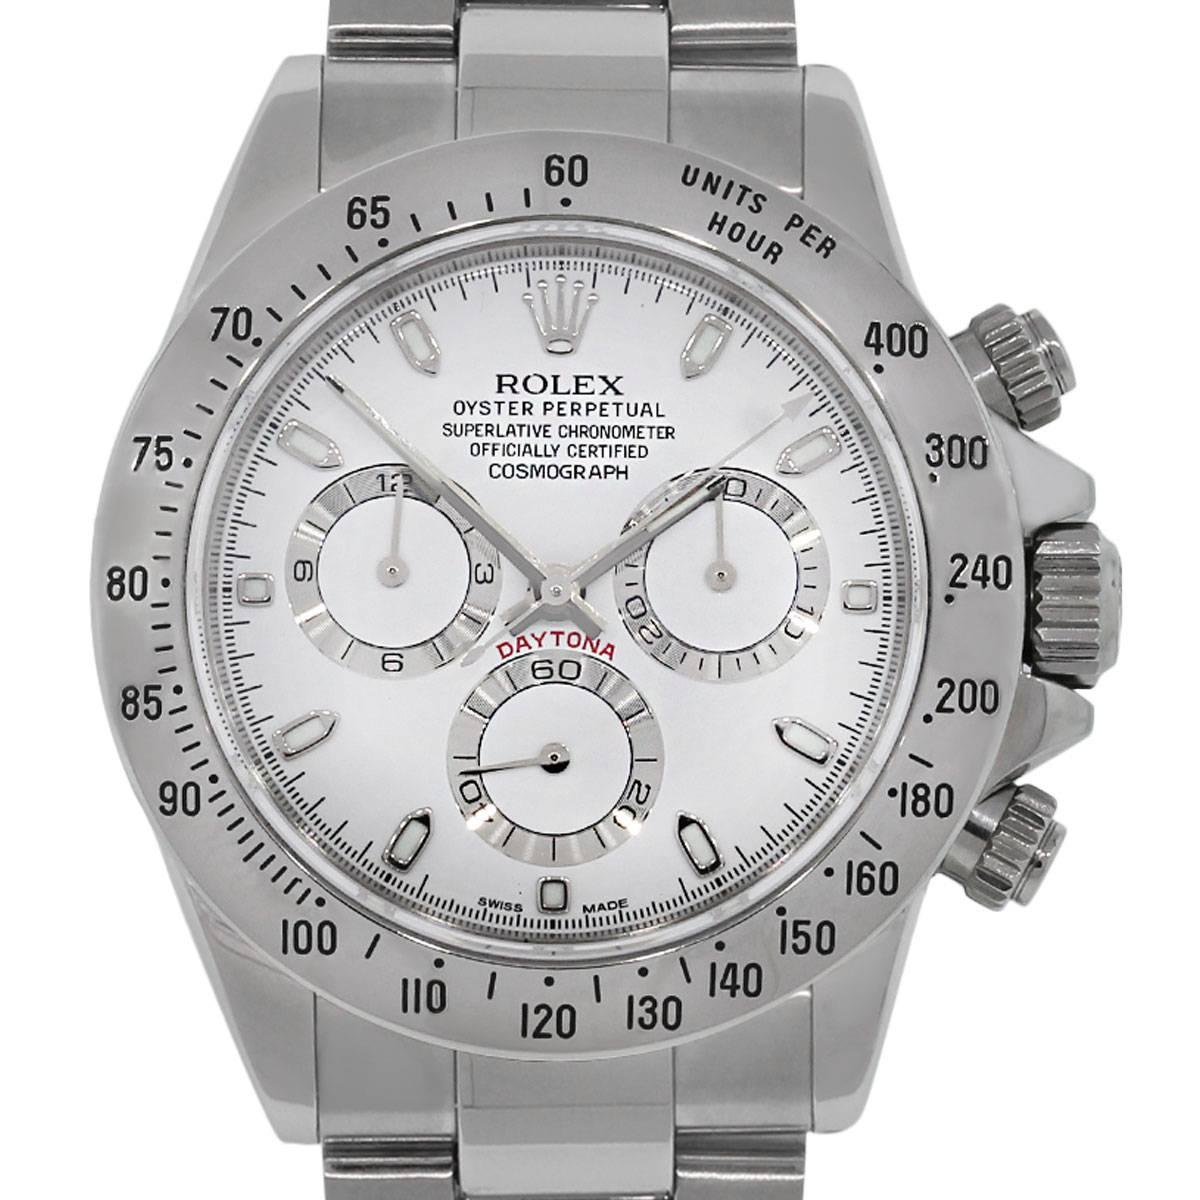 Rolex Daytona 116520 Cosmograph Stainless Steel Watch